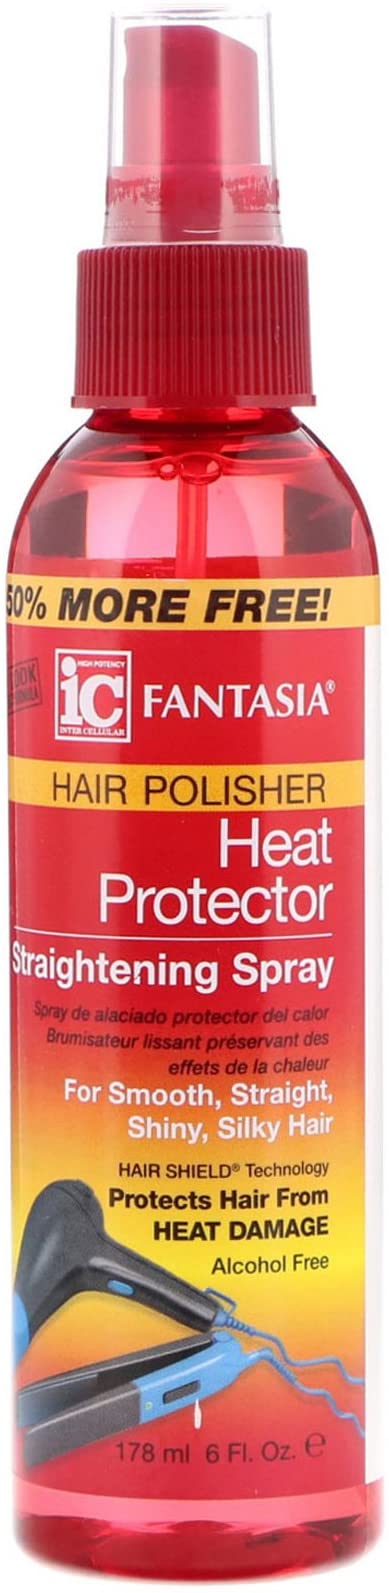 Fantasia Heat Protector Straightening Spray, 6 Fl.Oz - Beto Cosmetics